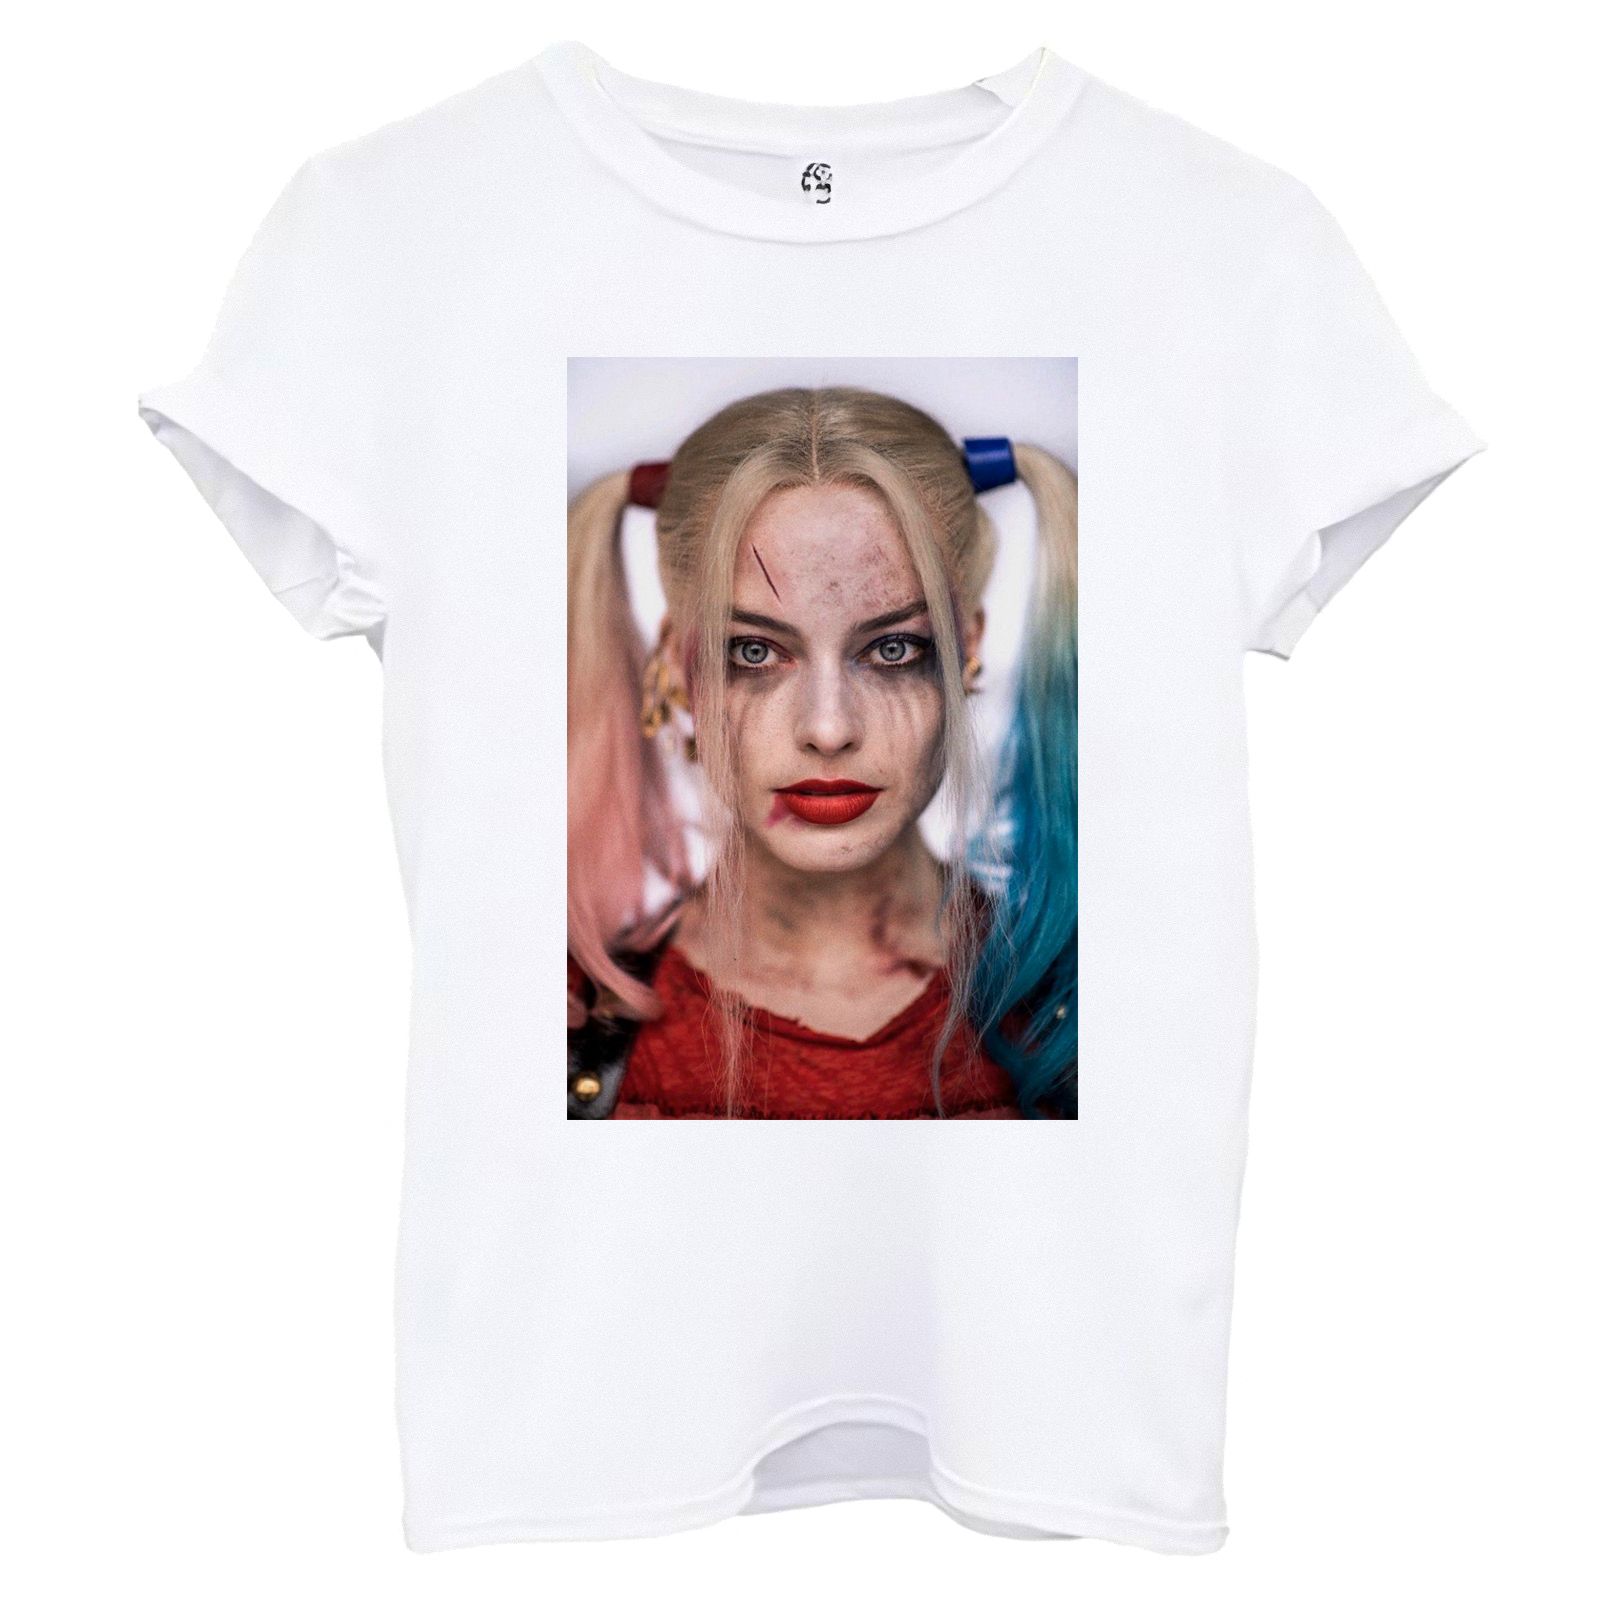 تی شرت آستین کوتاه زنانه اسد طرح هارلی کویین کد 122 -  - 1